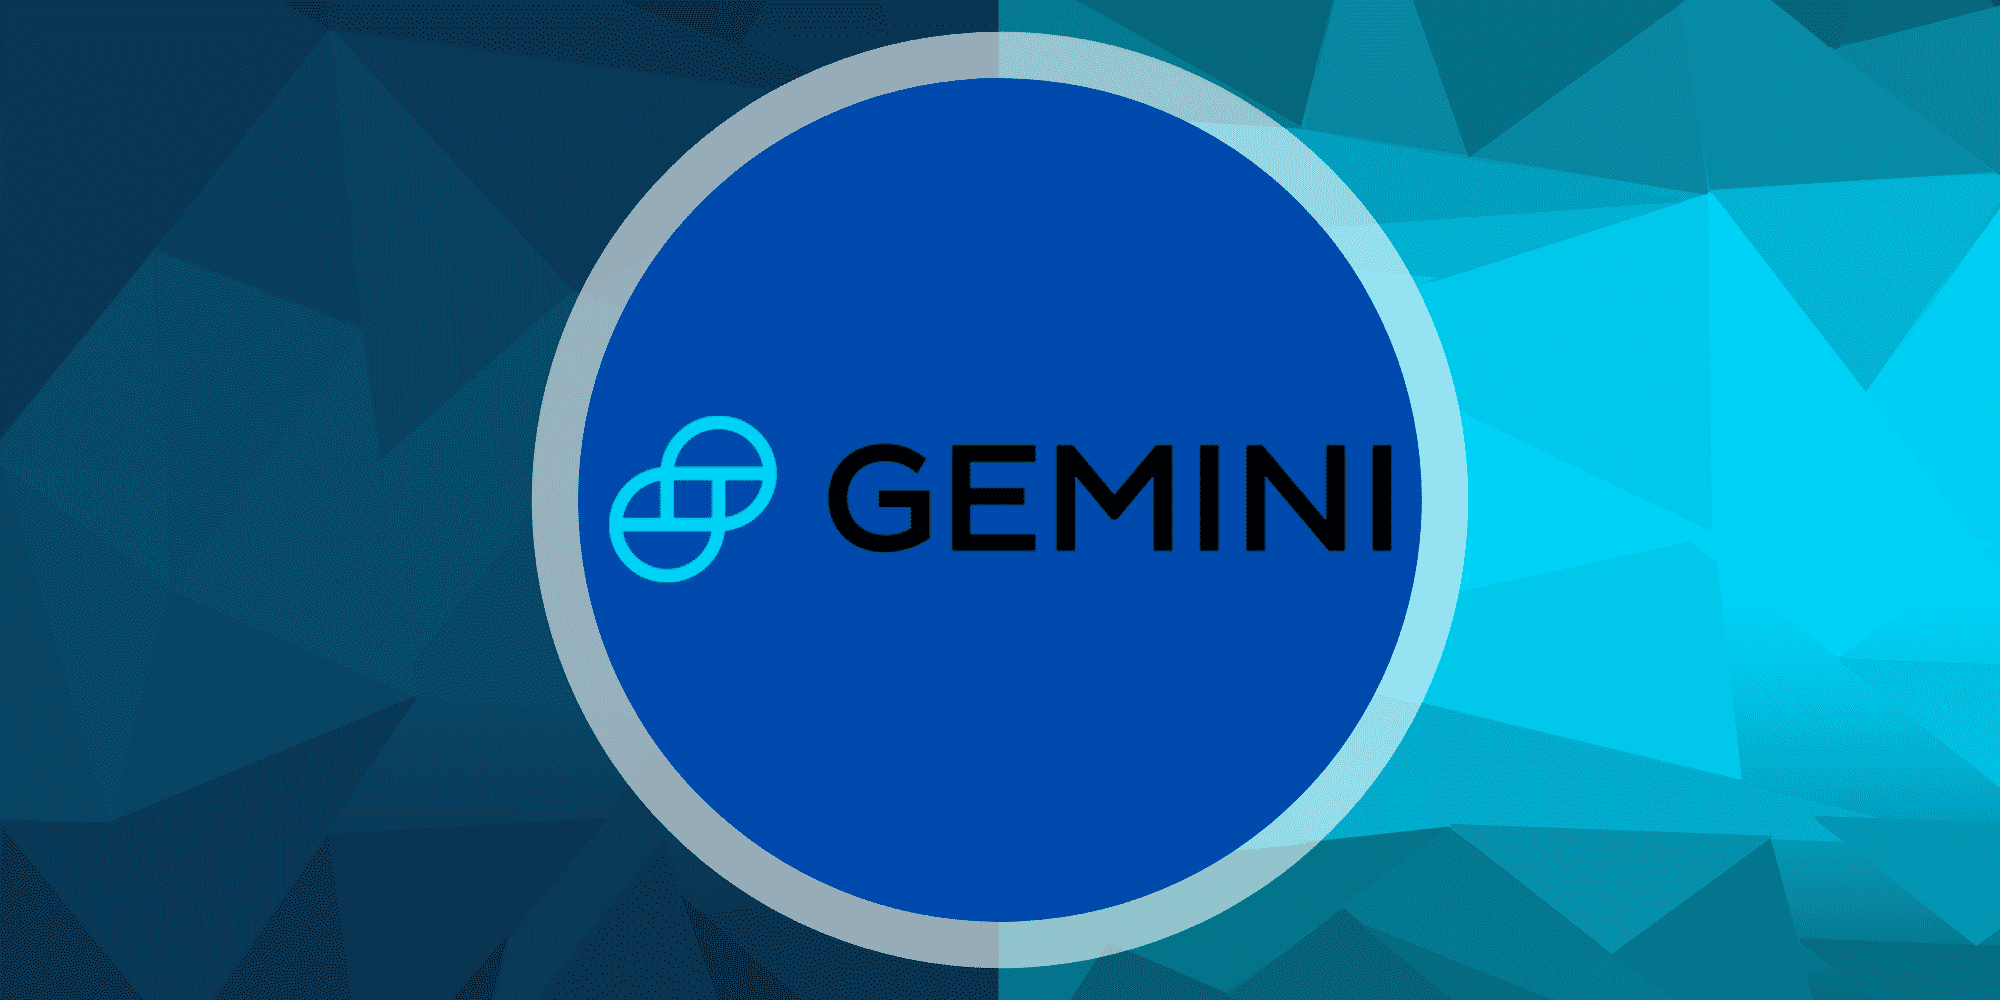 gemini trust company cryptocurrency website